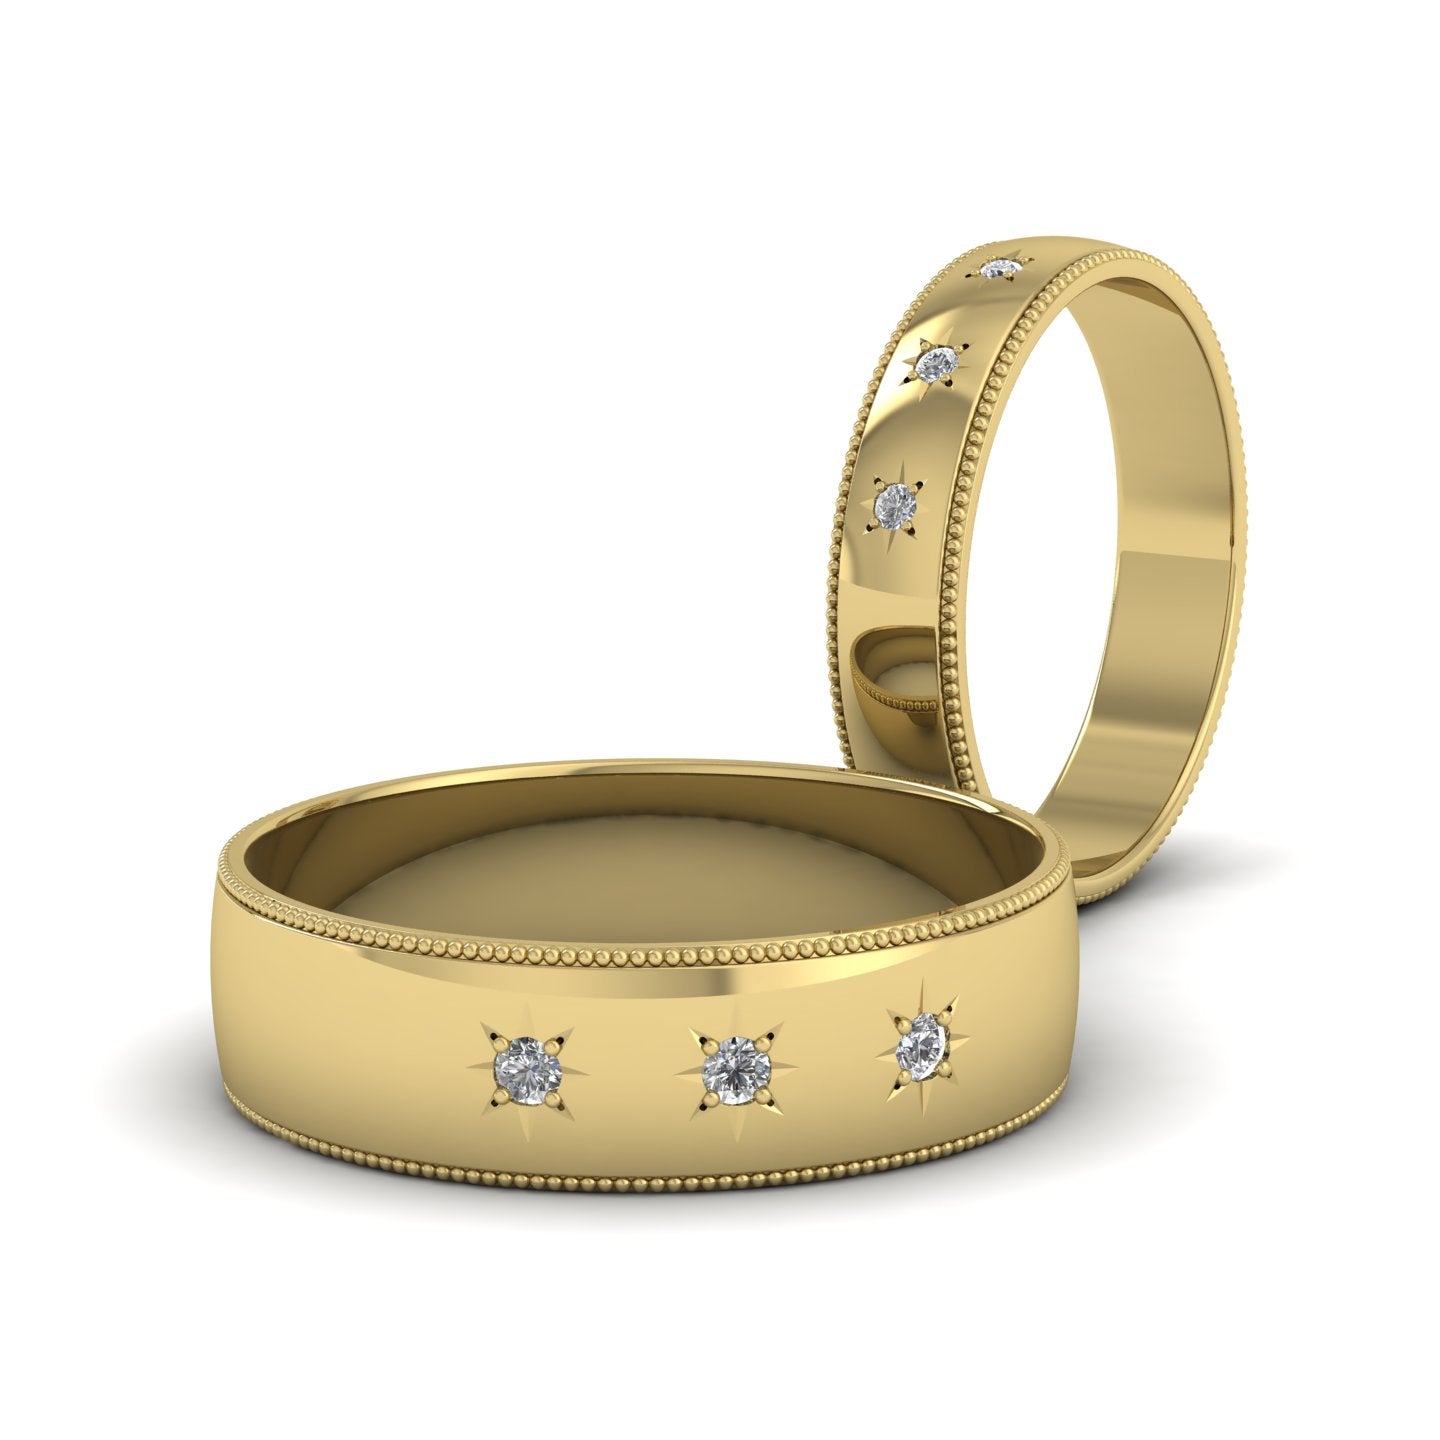 Millgrained Edge And Three Star Diamond Set 14ct Yellow Gold 4mm Wedding Ring